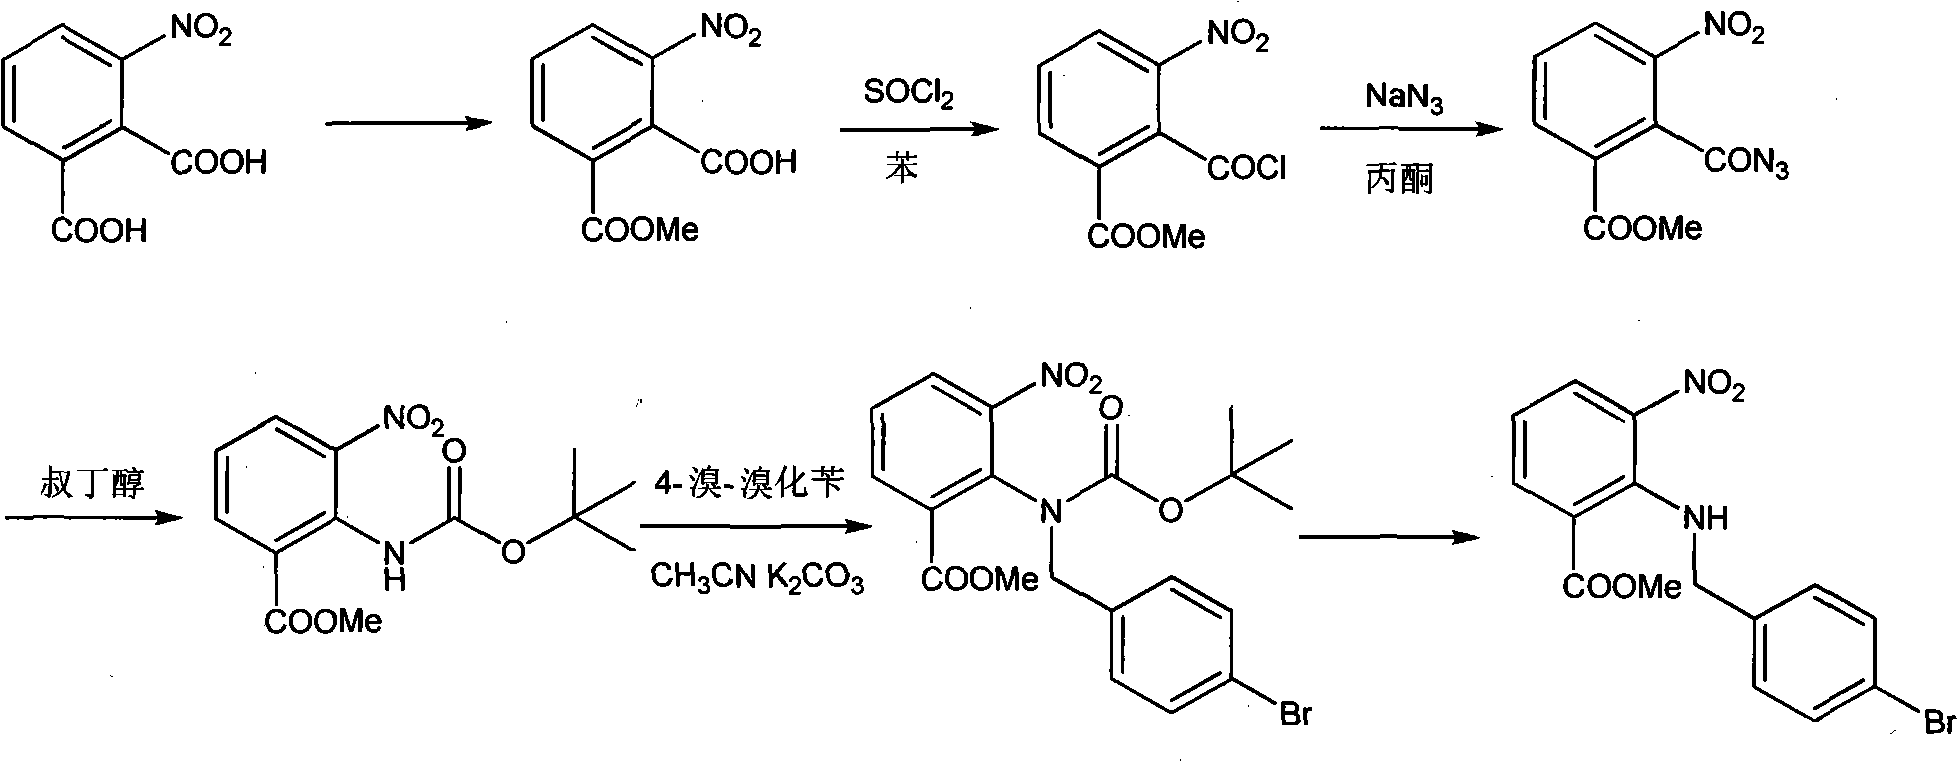 Method for preparing 2-(substituted phenyl) methylamino-3-nitrobenzene methyl formate by one-pot method